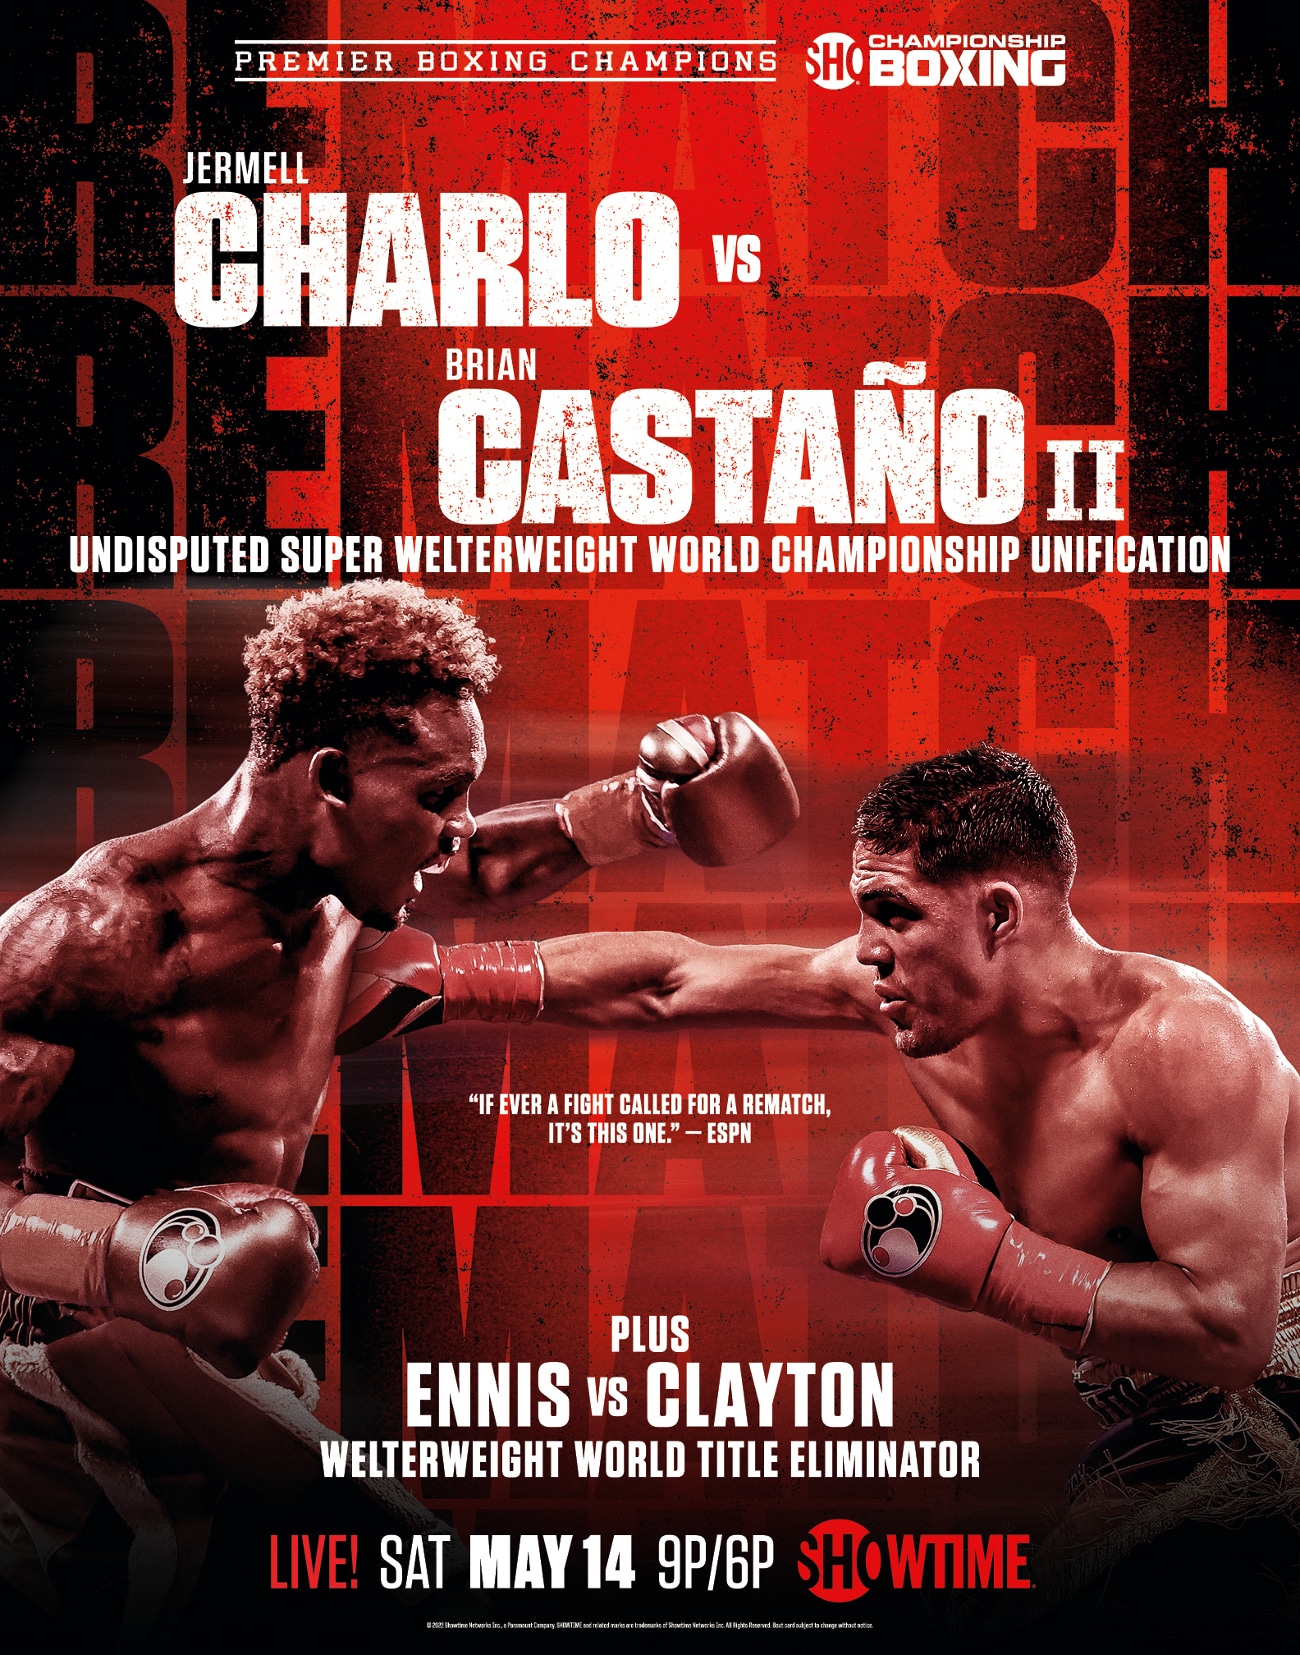 Brian Castano, Jermell Charlo boxing image / photo